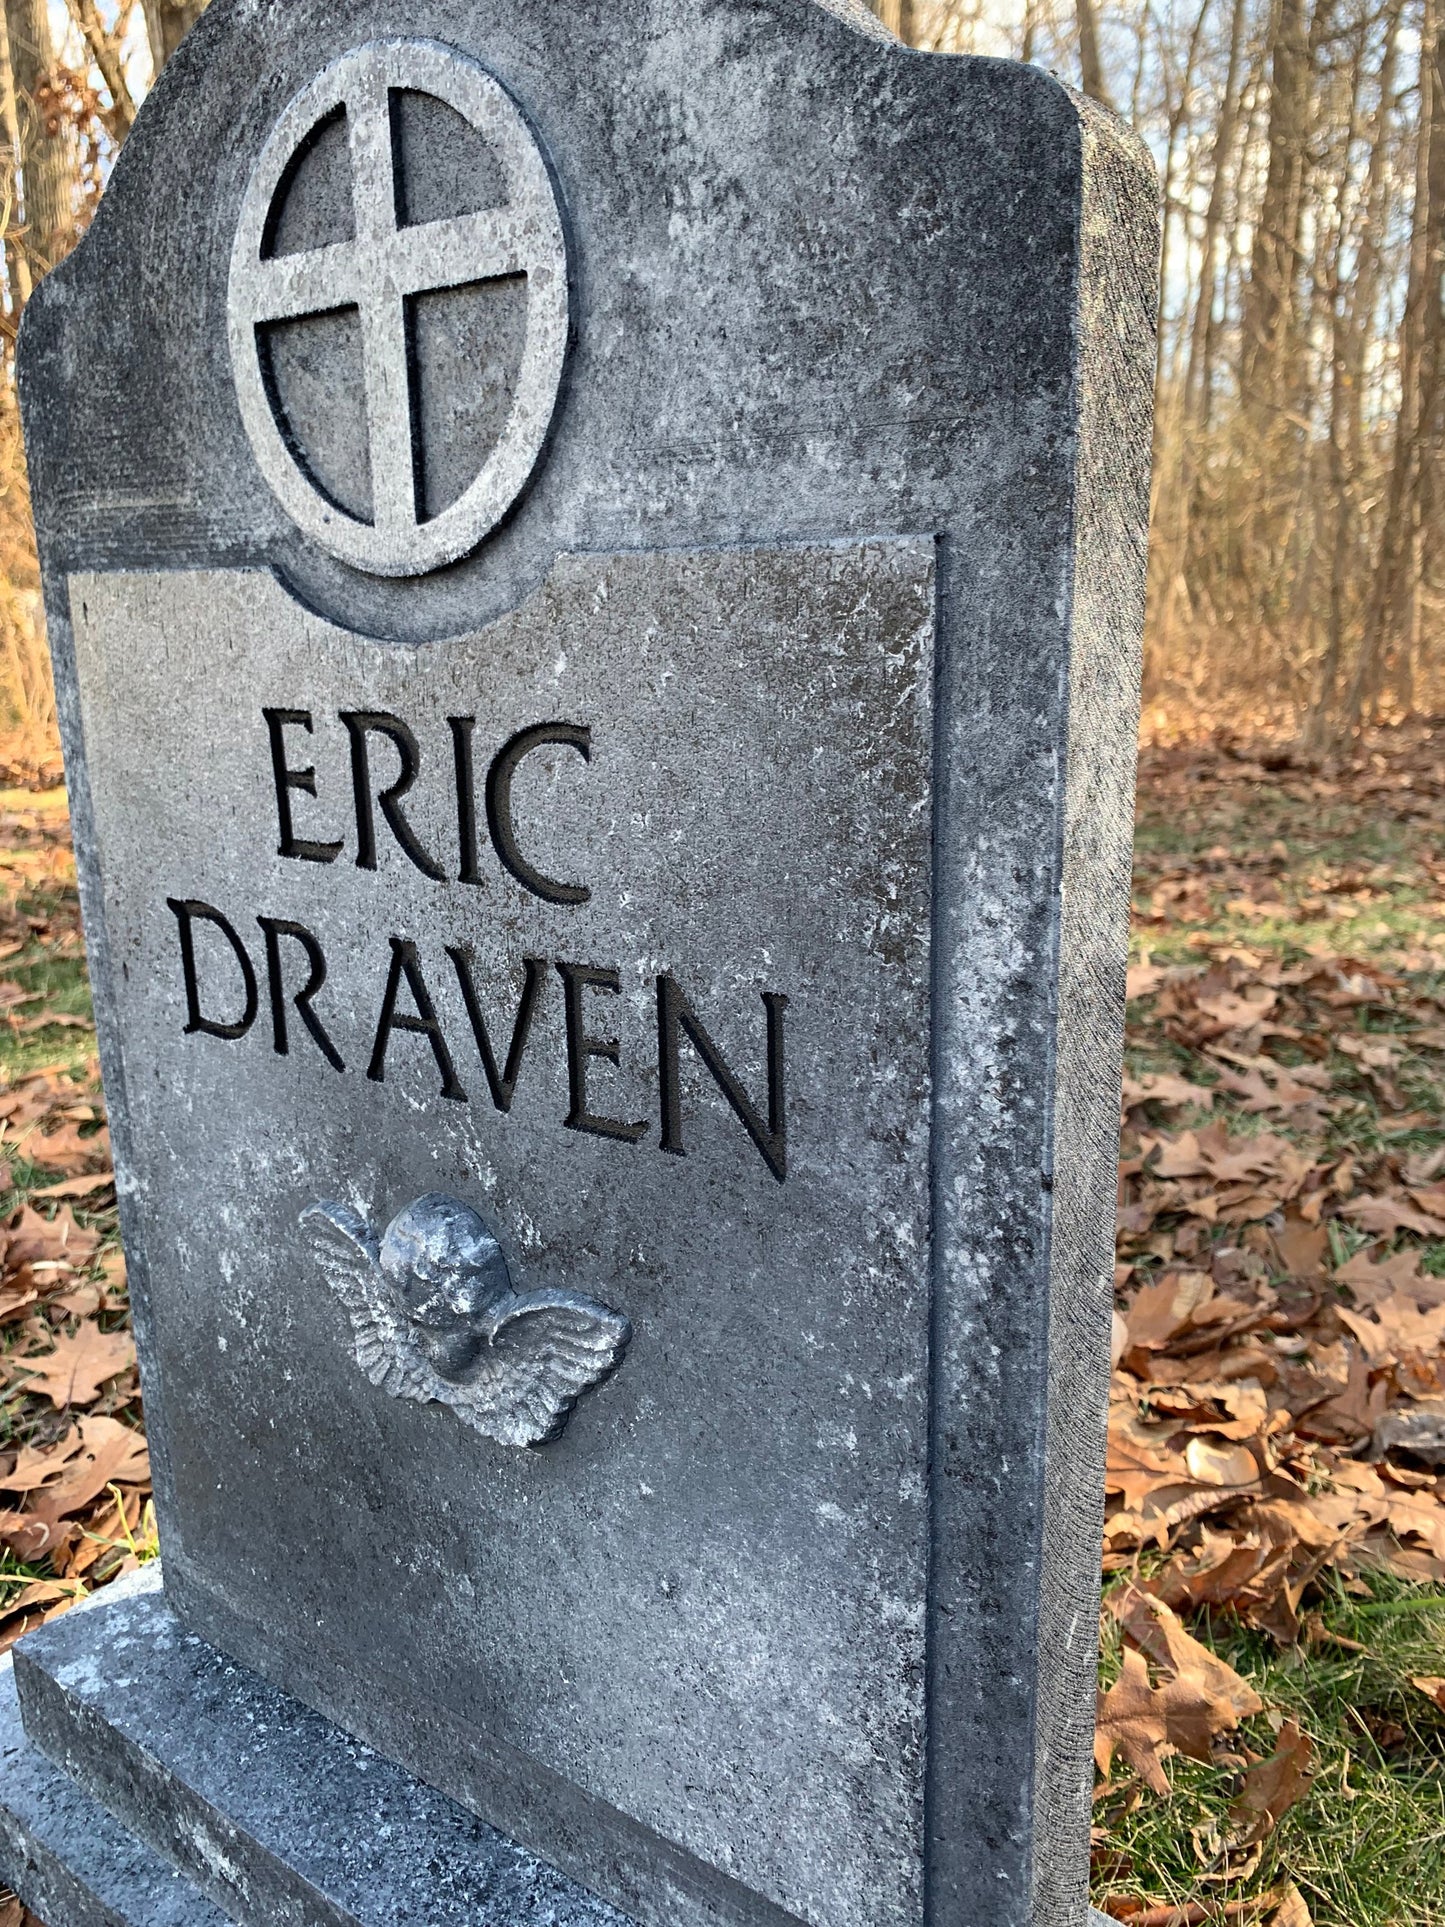 The Crow Eric Draven Full Size Headstone Tombstone Movie Replica